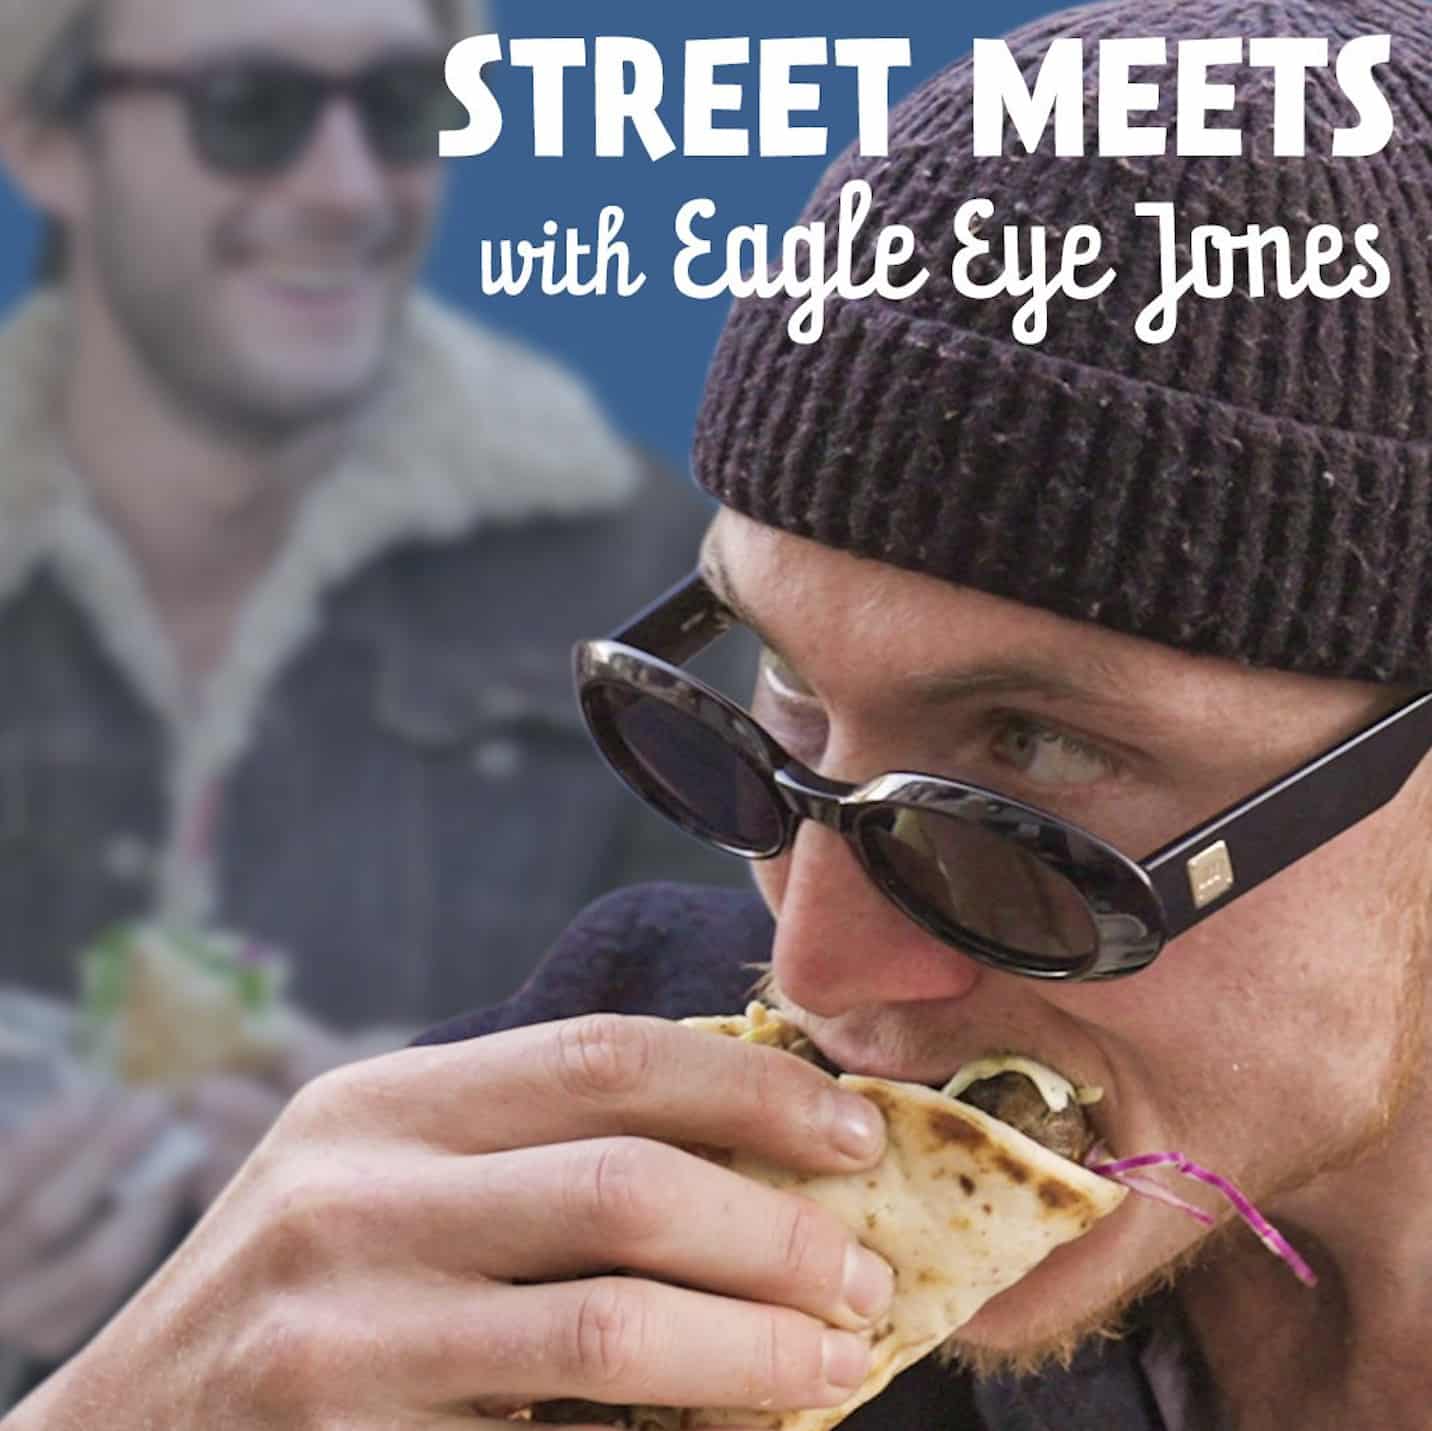 STREET MEETS - EAGLE EYE JONES LIVE FROM HAPPY STUDIOS.